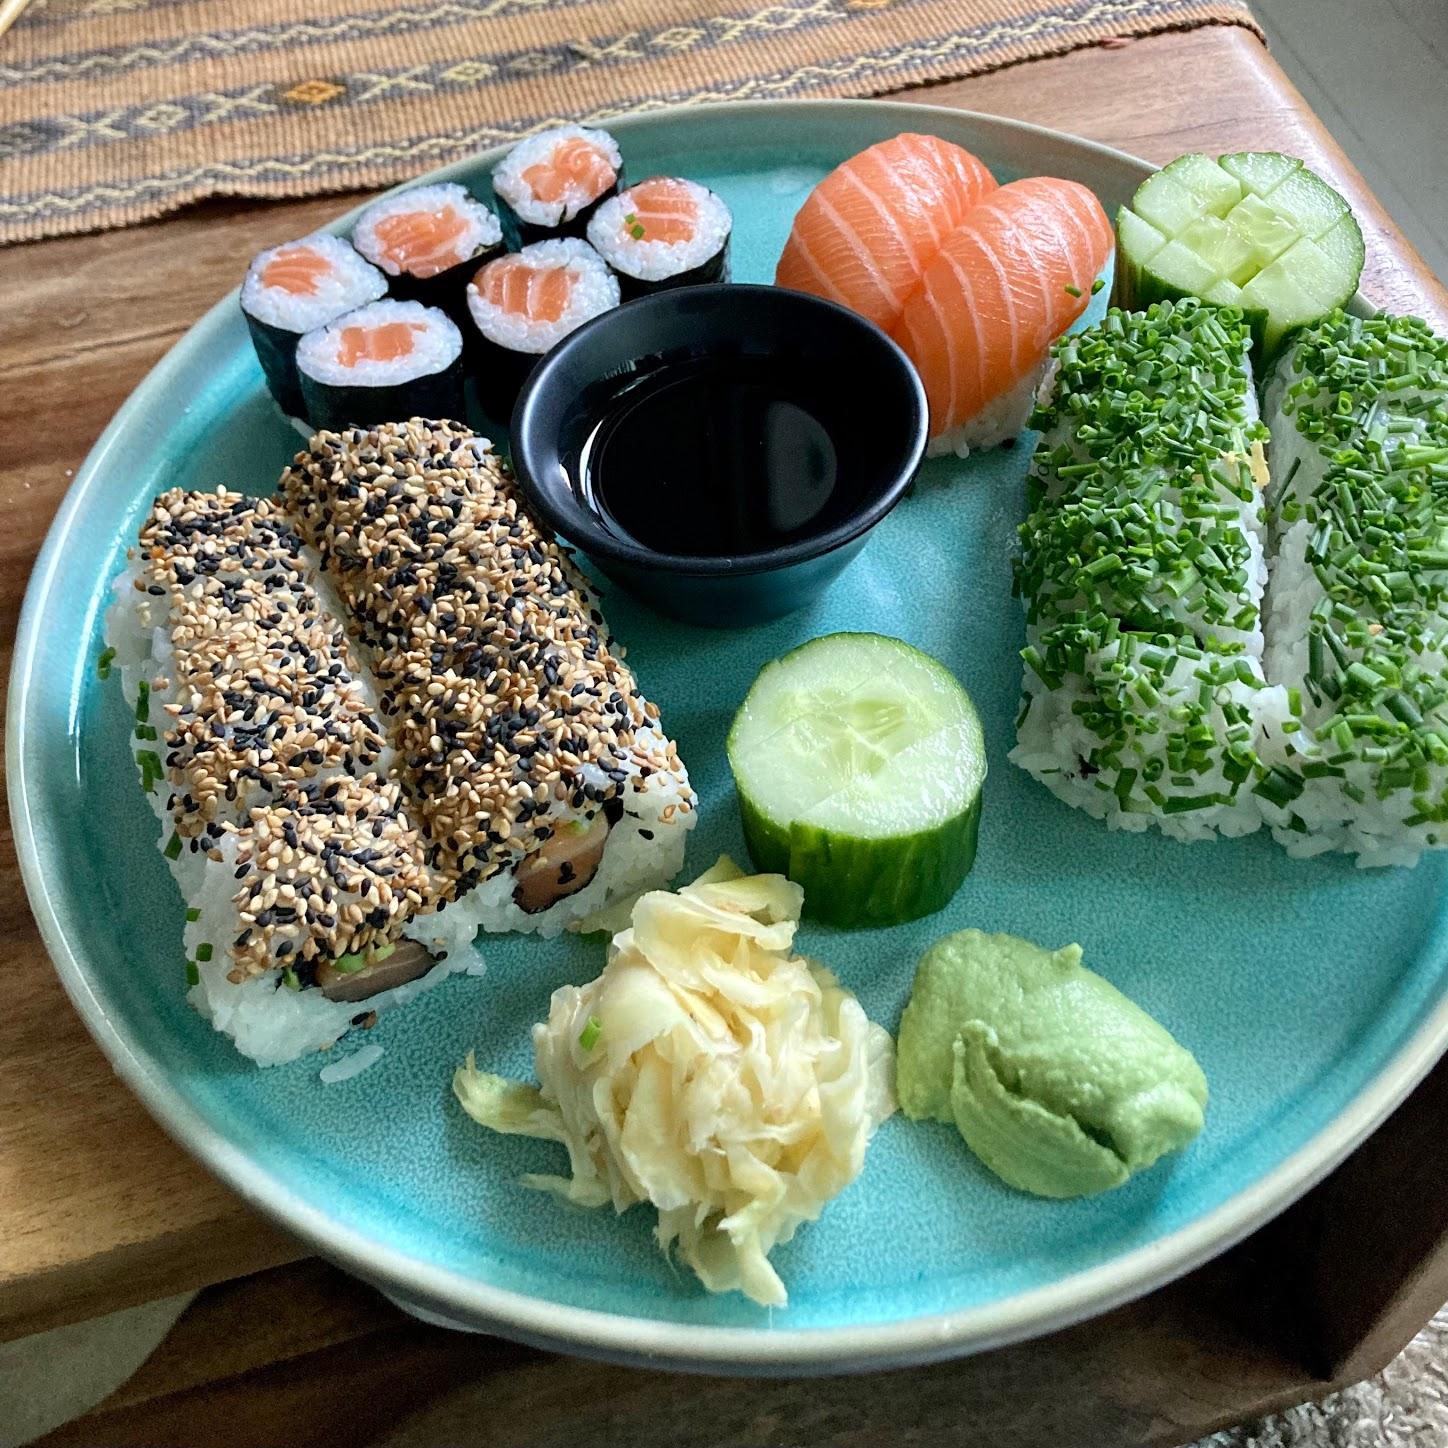 Restaurant "Sushi Mana" in Berlin